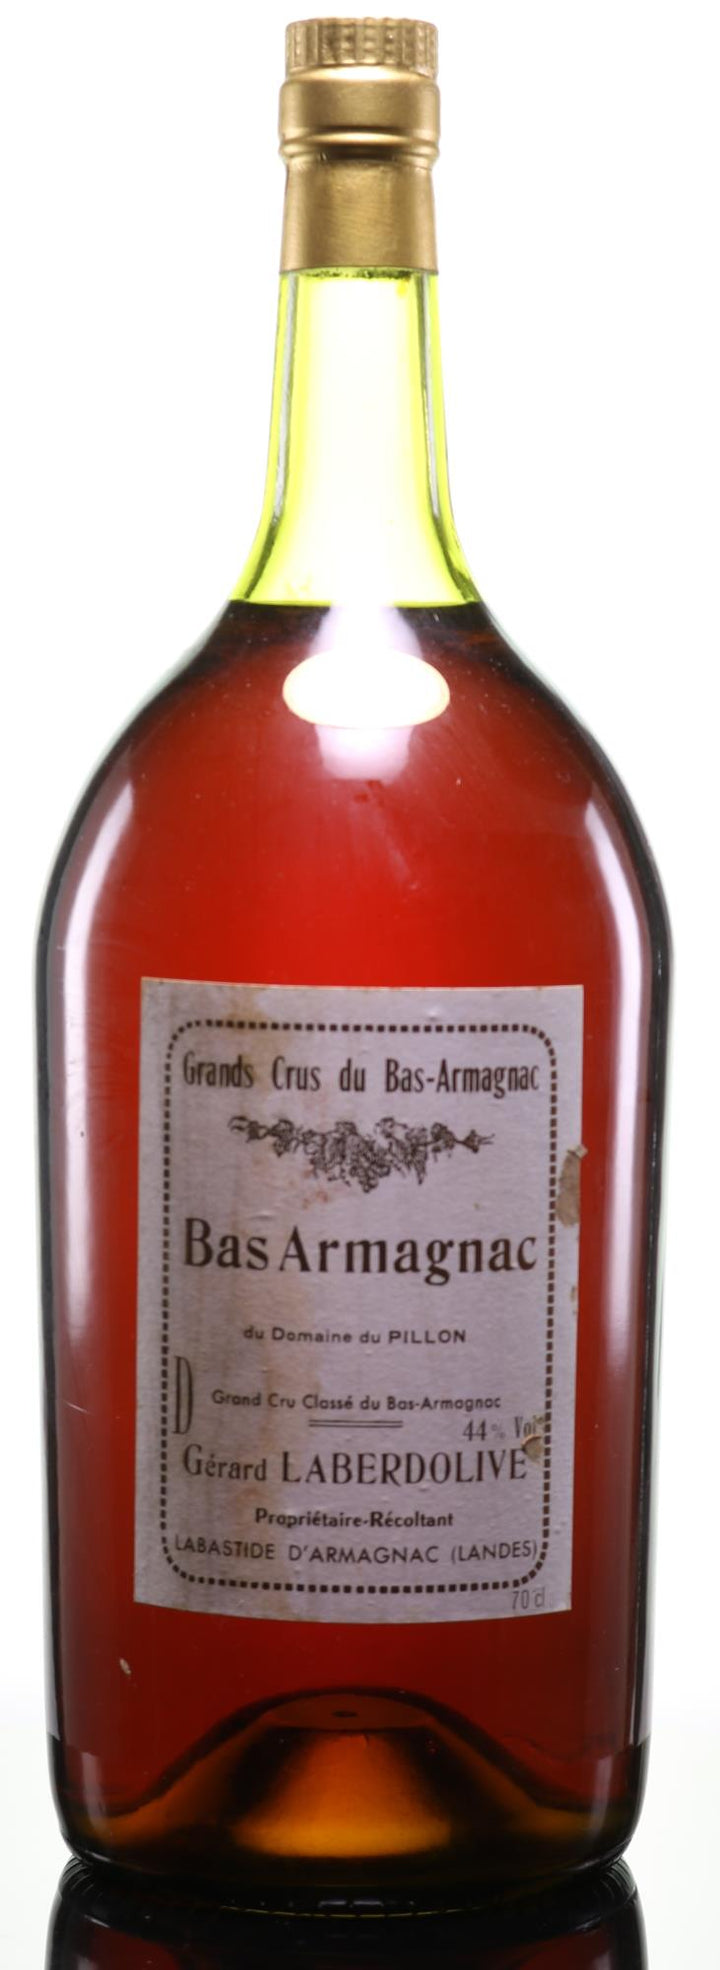 Laberdolive 1970 Grands Crus du Bas-Armagnac Armagnac (1.5L Magnum) - Rue Pinard